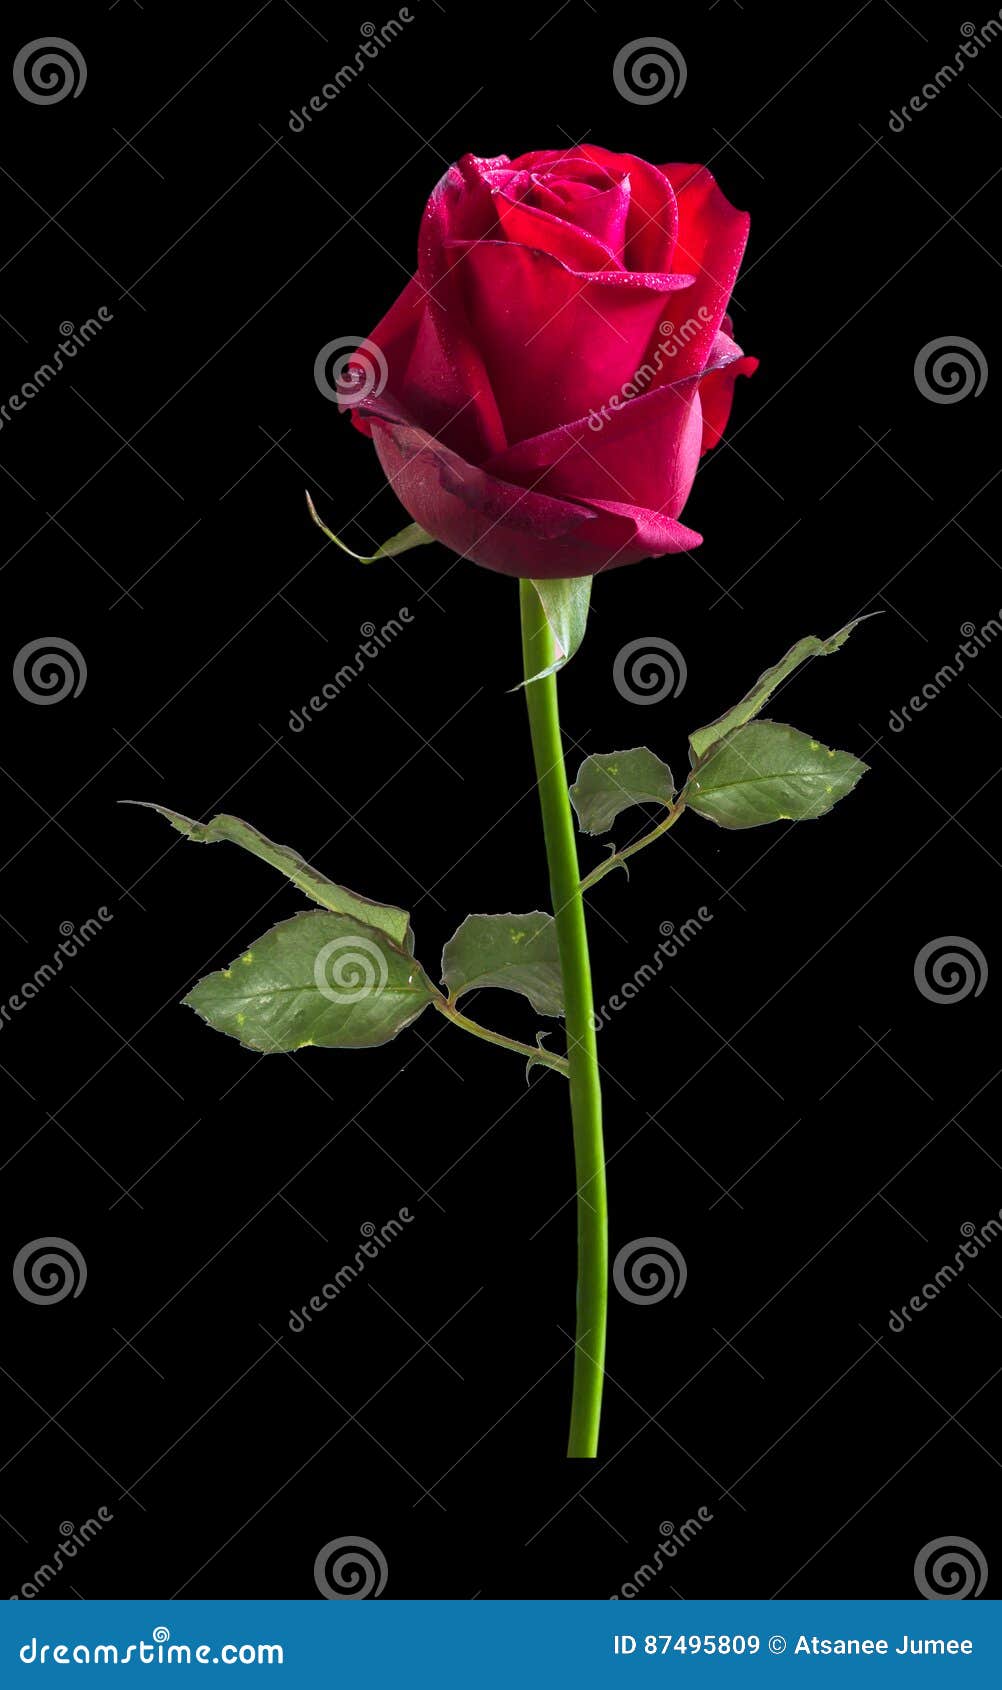 Rose Flower Nature Red Rose on Black Background Stock Image ...